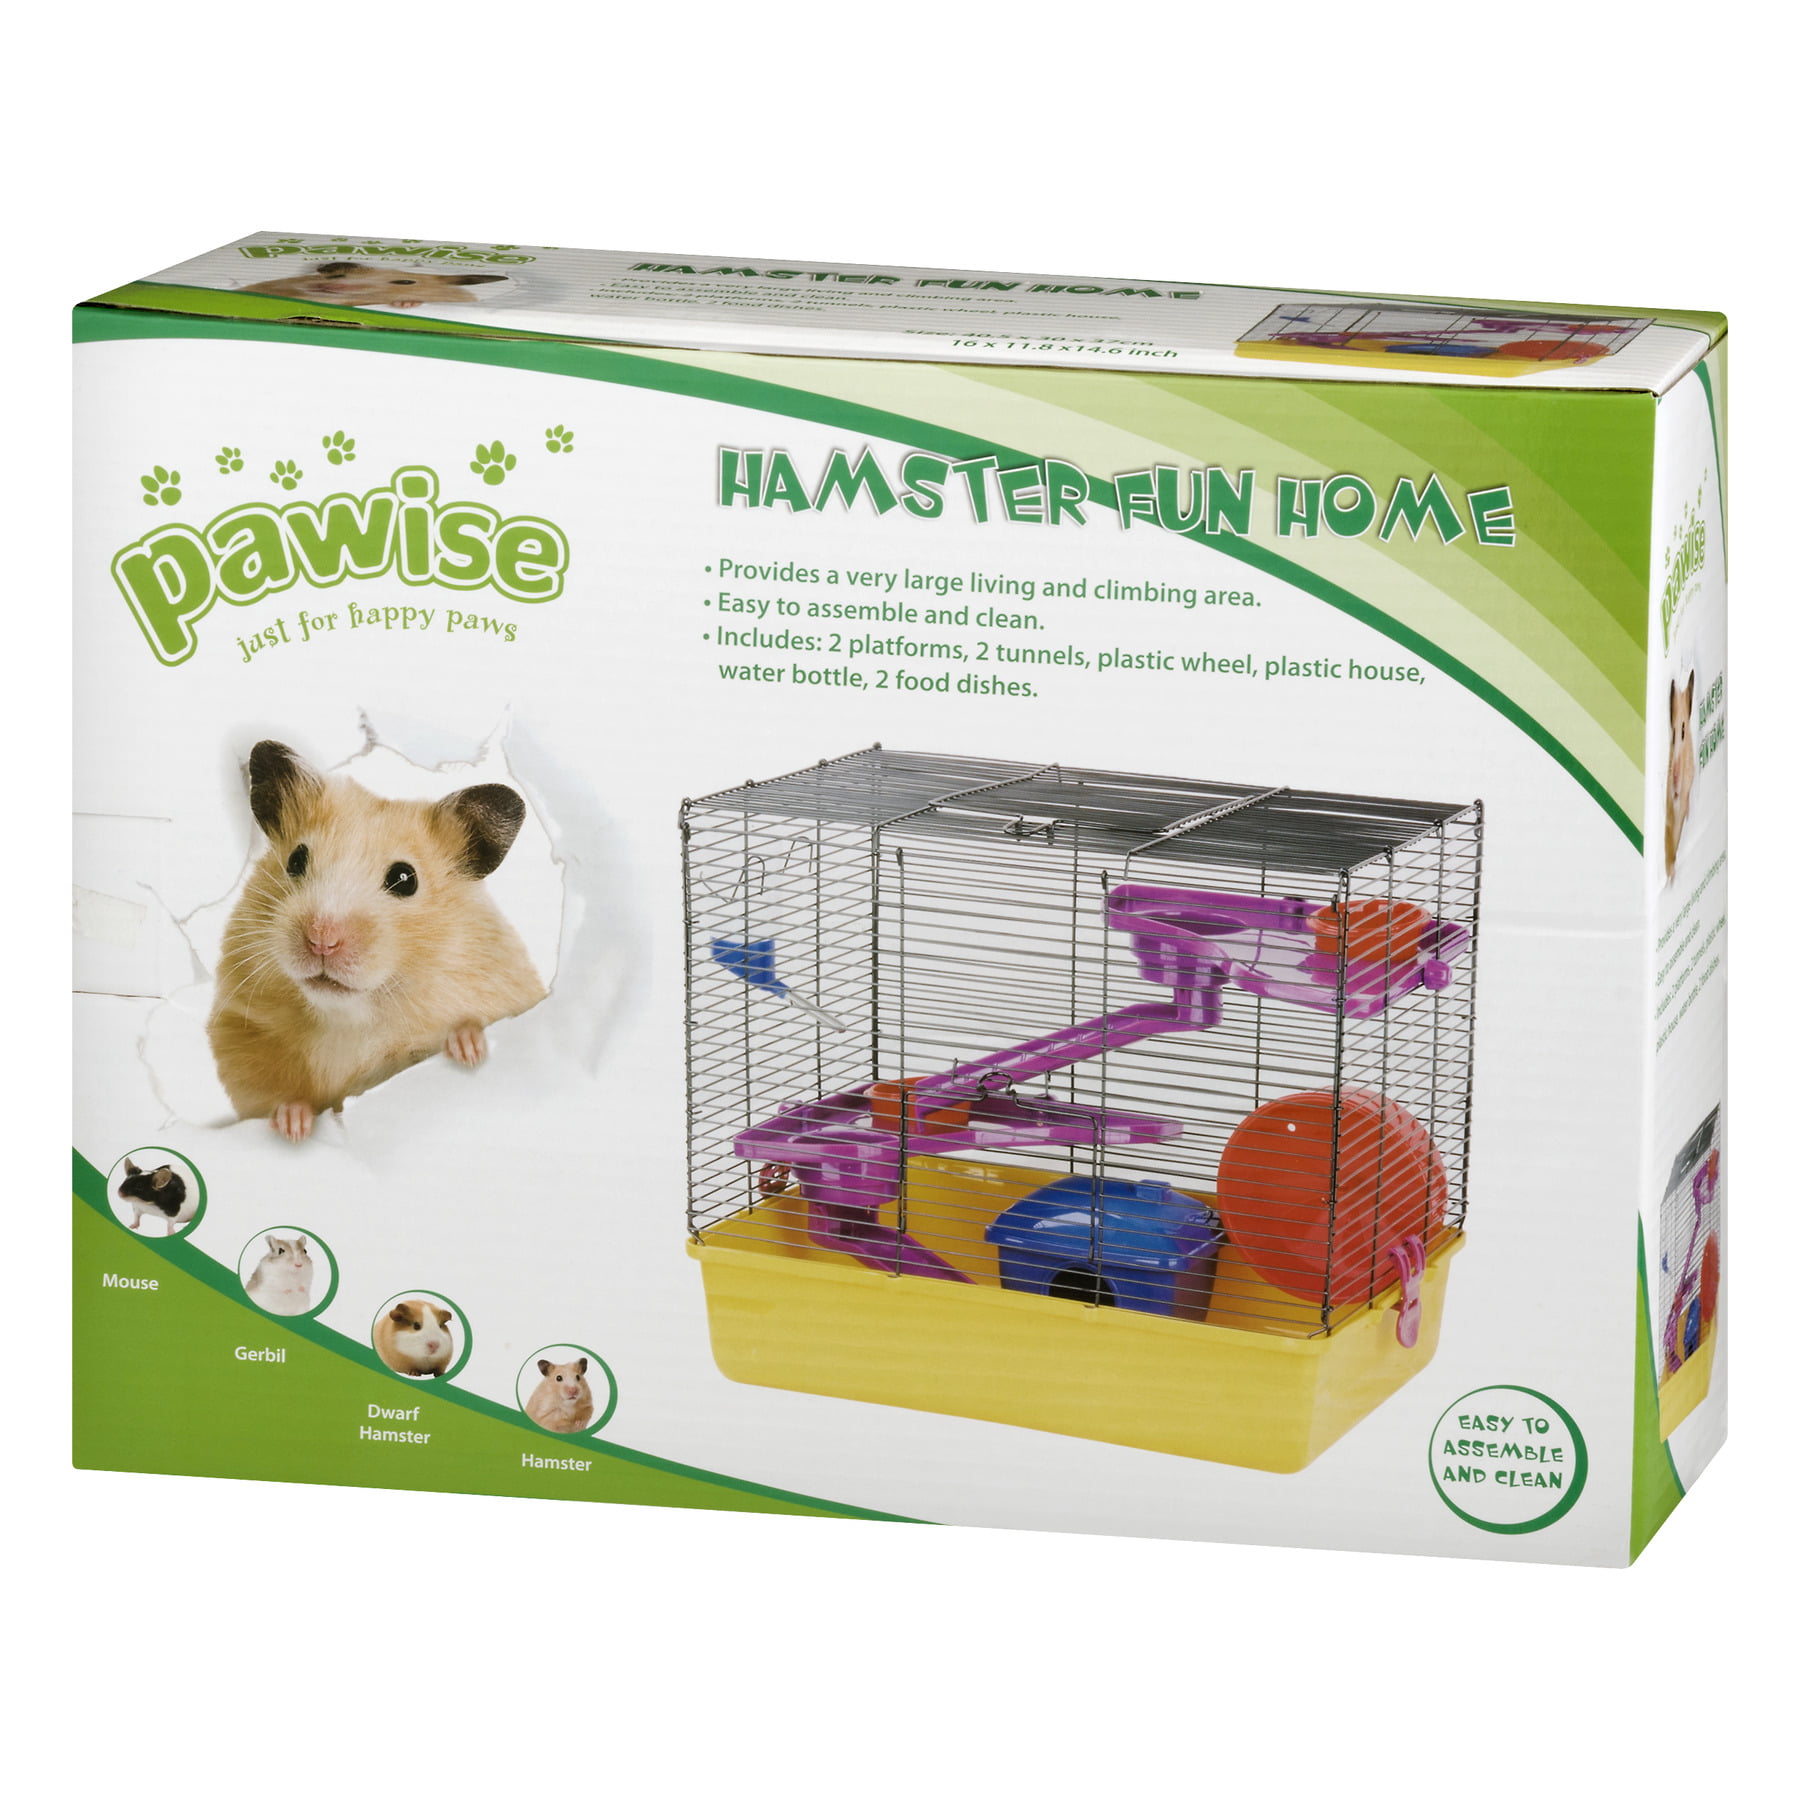 pawise hamster fun home